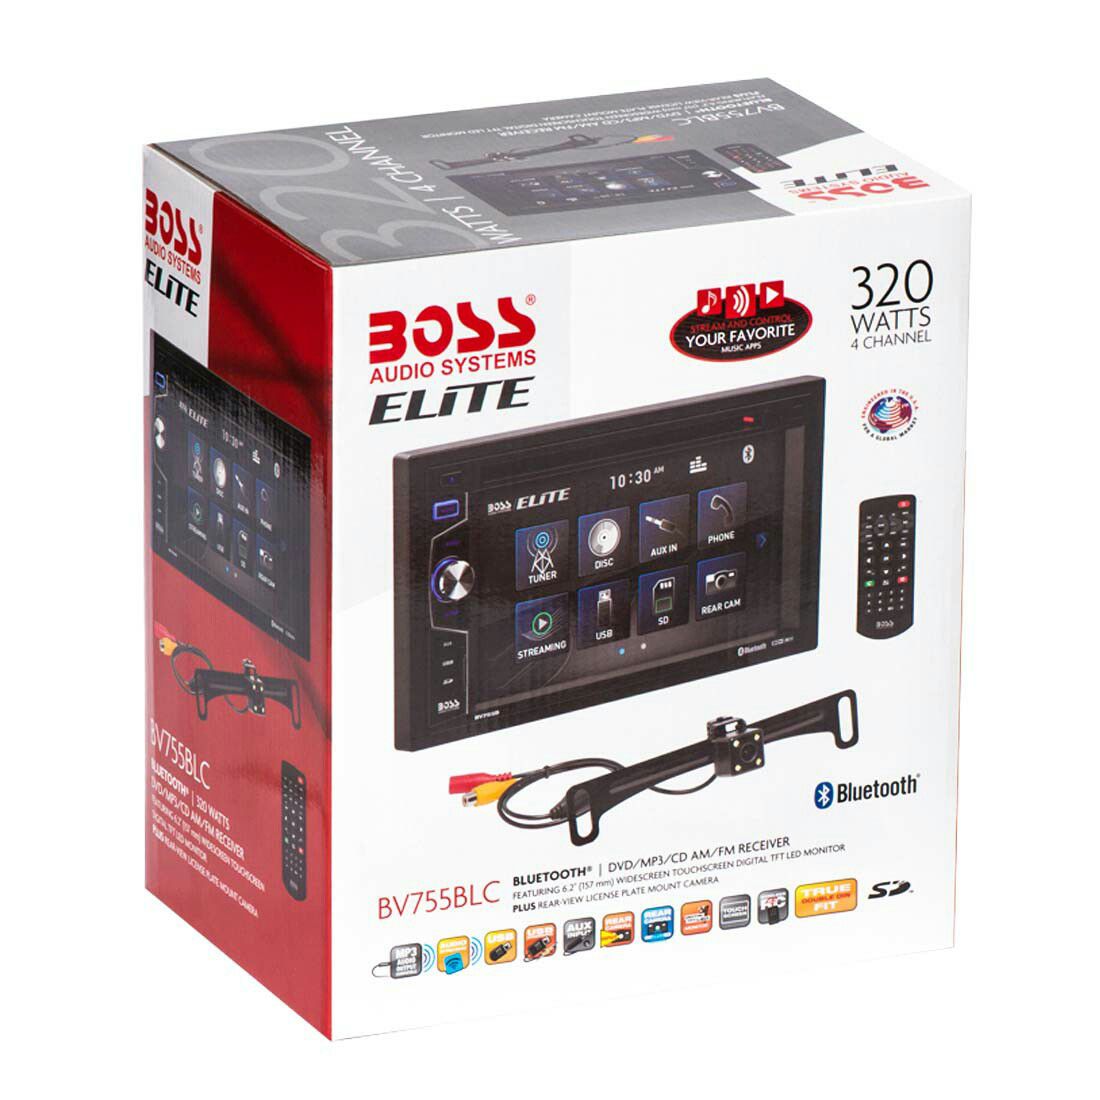 BOSS Audio - 6.2" - Built-in Bluetooth - In-Dash CD/DVD/DM Receiver - Black